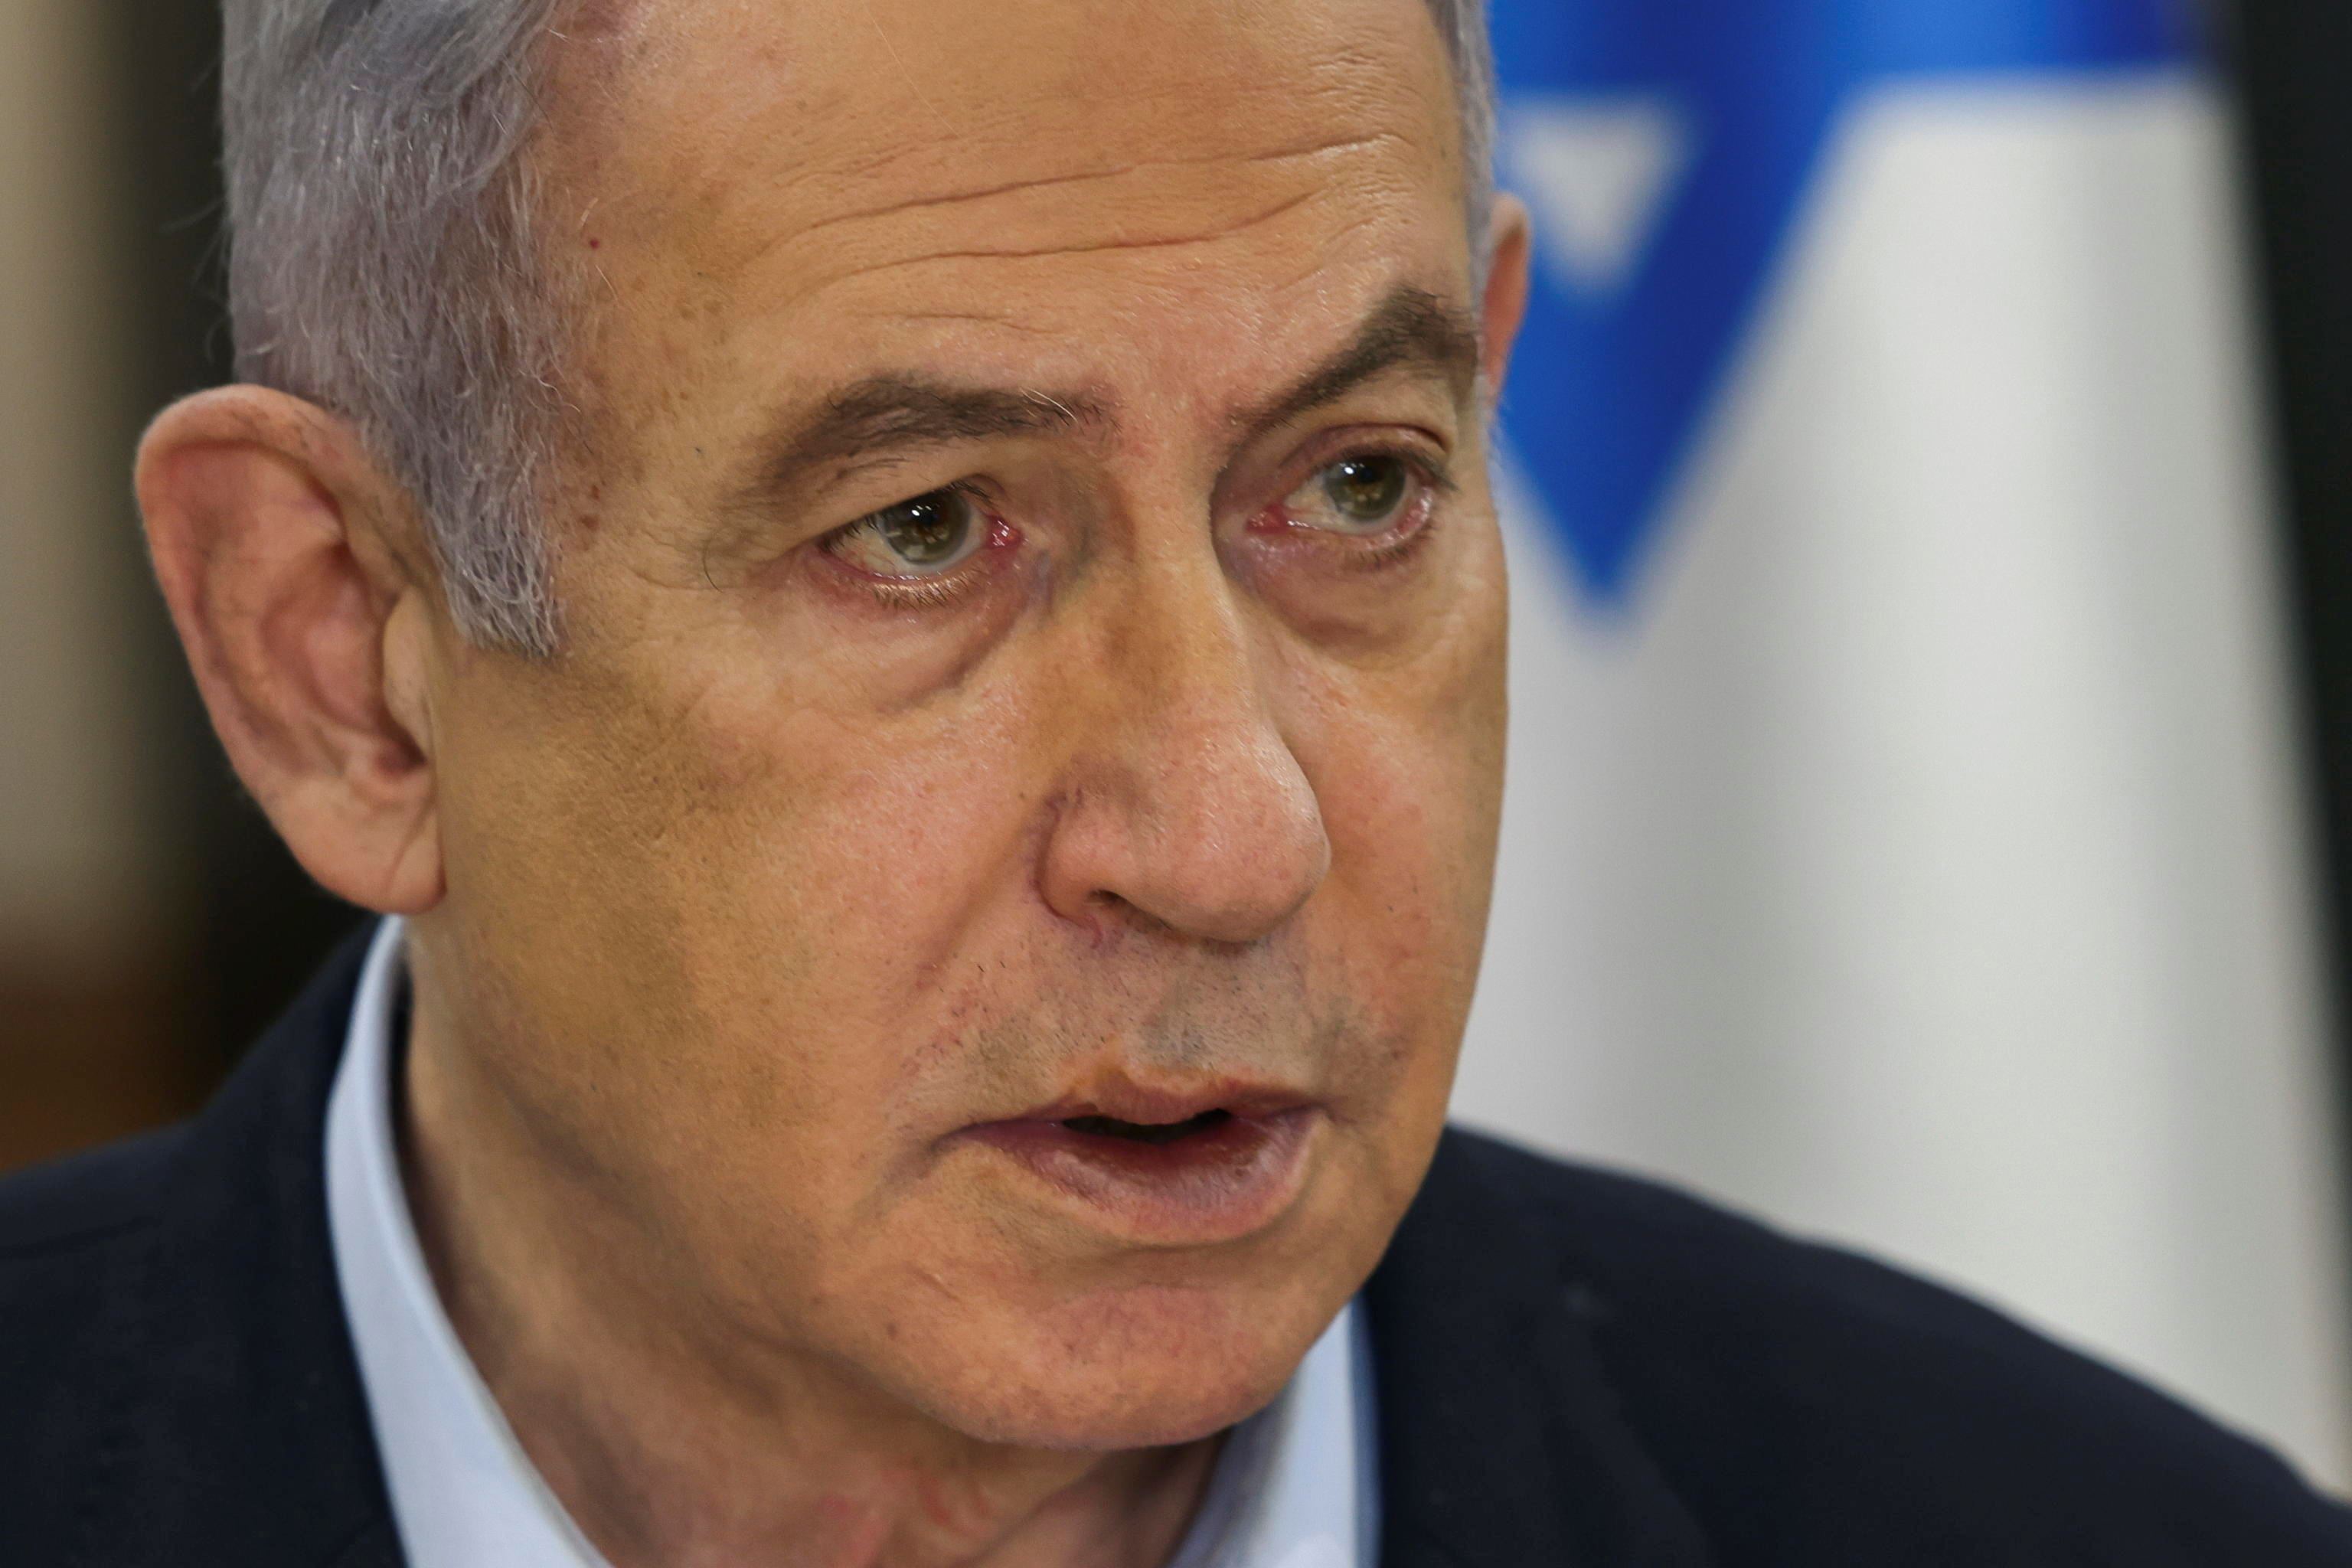 Il premier israeliano Benjamin Netanyahu